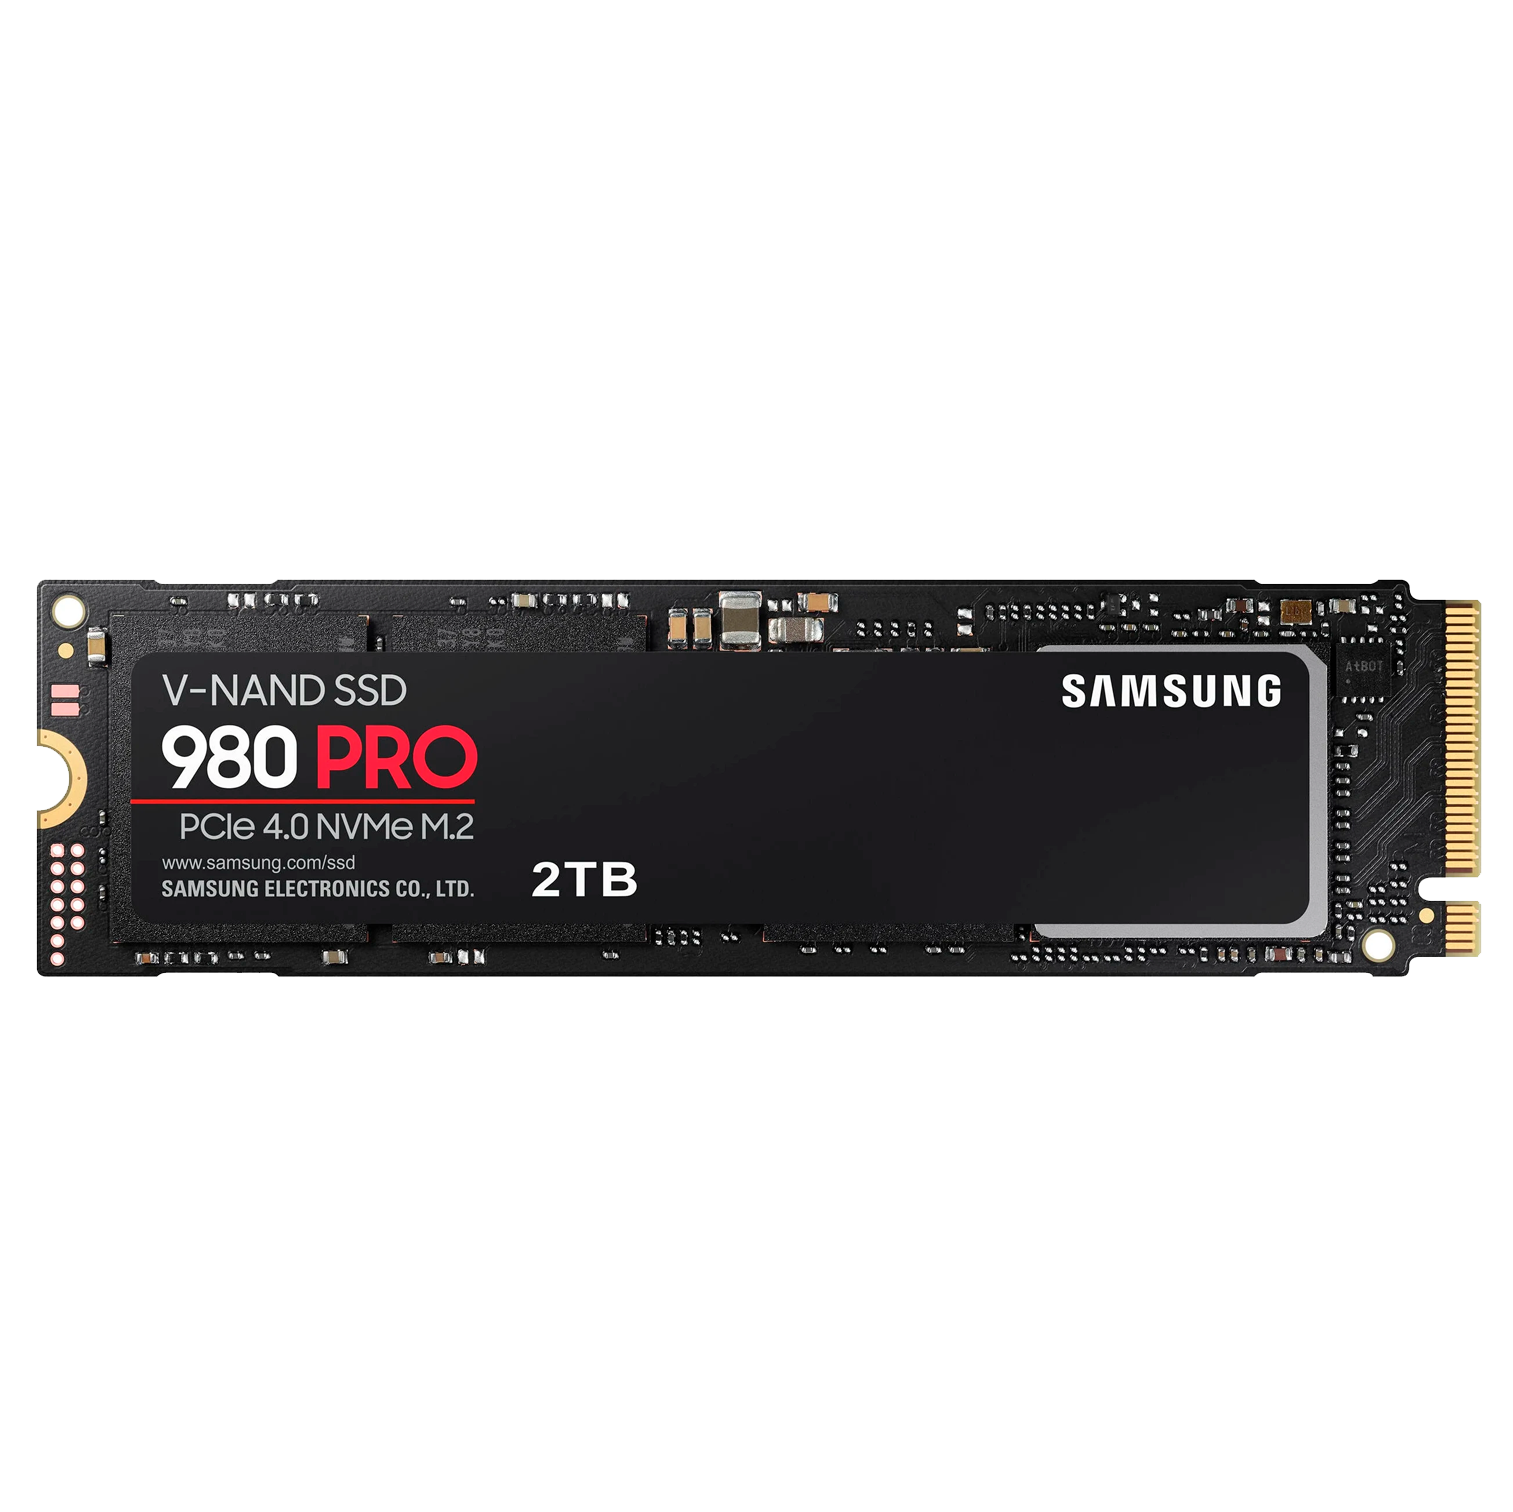 SSD m2 Samsung. Samsung SSD 970 EVO Plus 500gb. SSD Samsung 980 Pro 2tb. Samsung m.2 970 EVO Plus 500 GB.